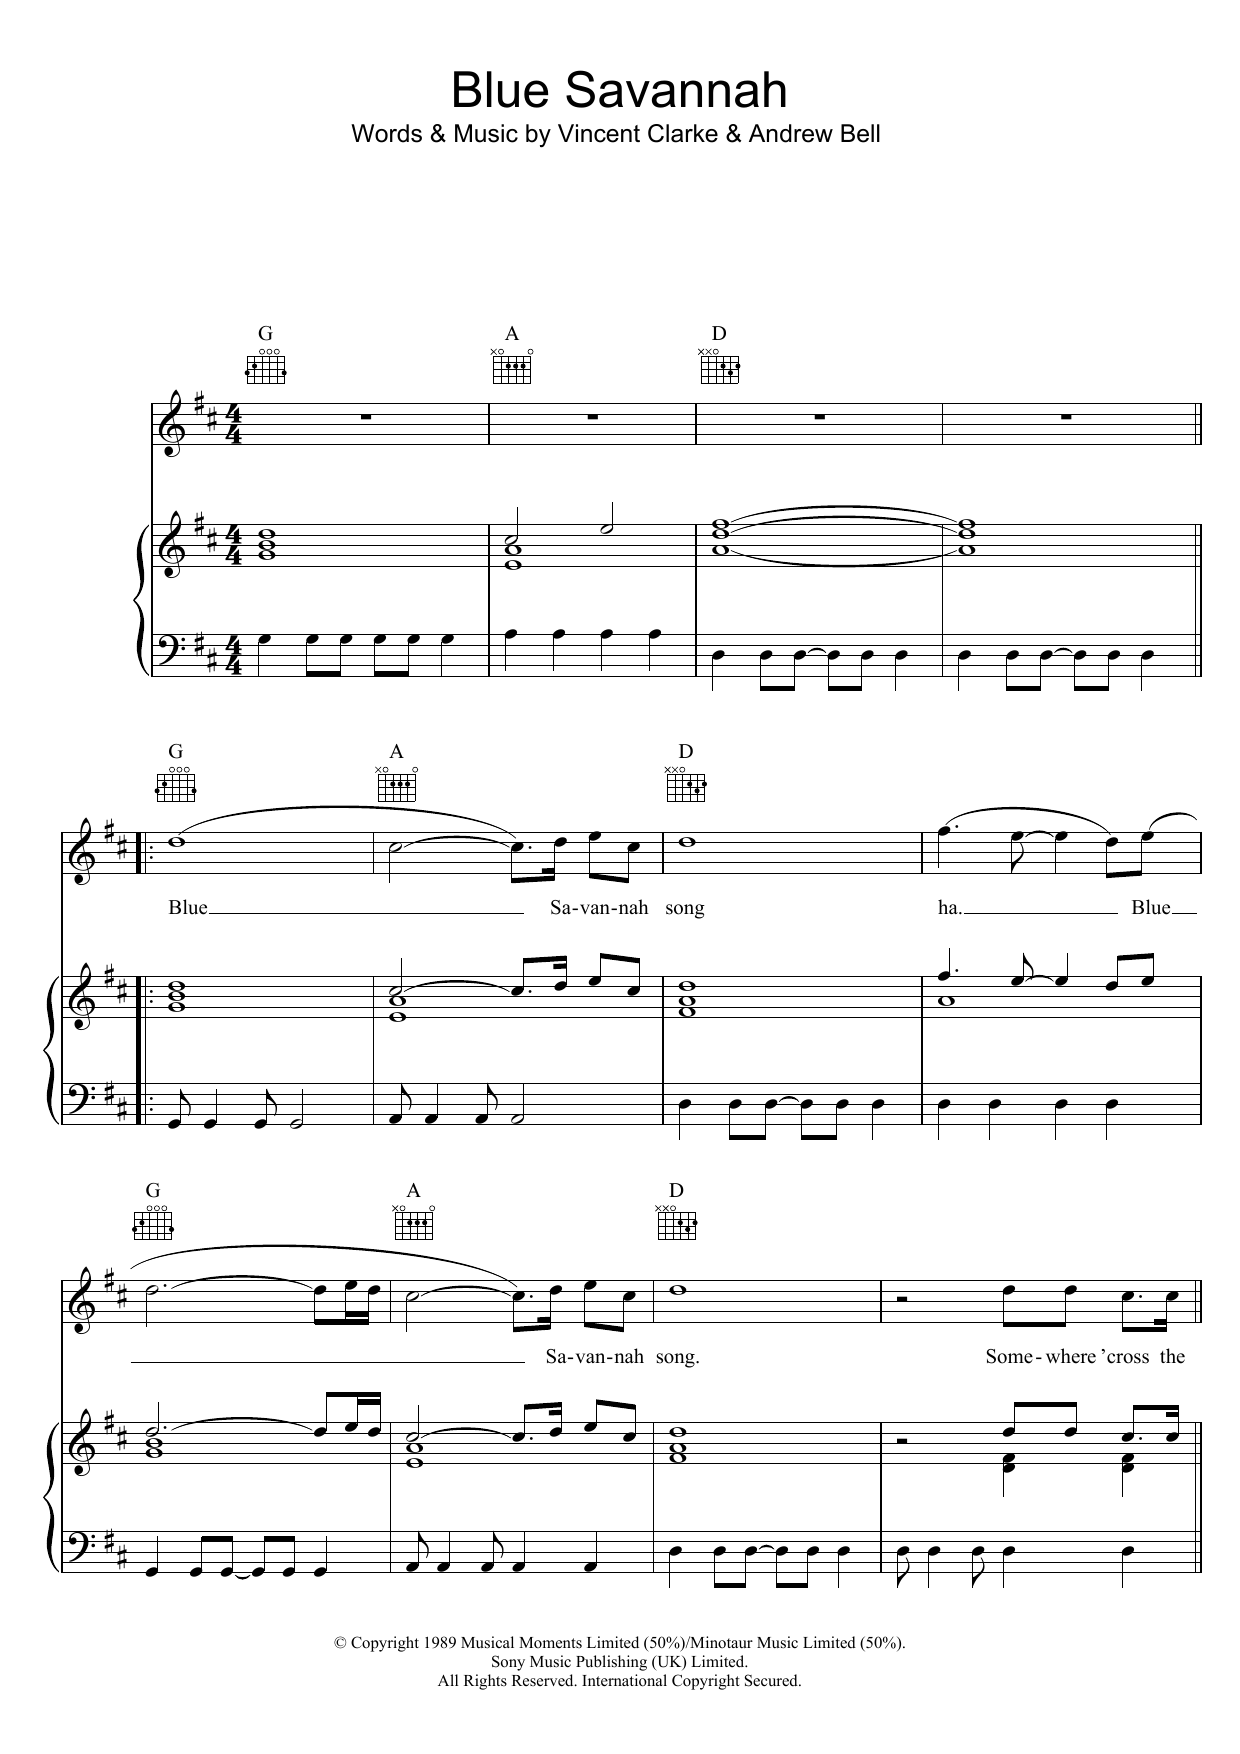 Erasure Blue Savannah Sheet Music Notes & Chords for Piano, Vocal & Guitar (Right-Hand Melody) - Download or Print PDF